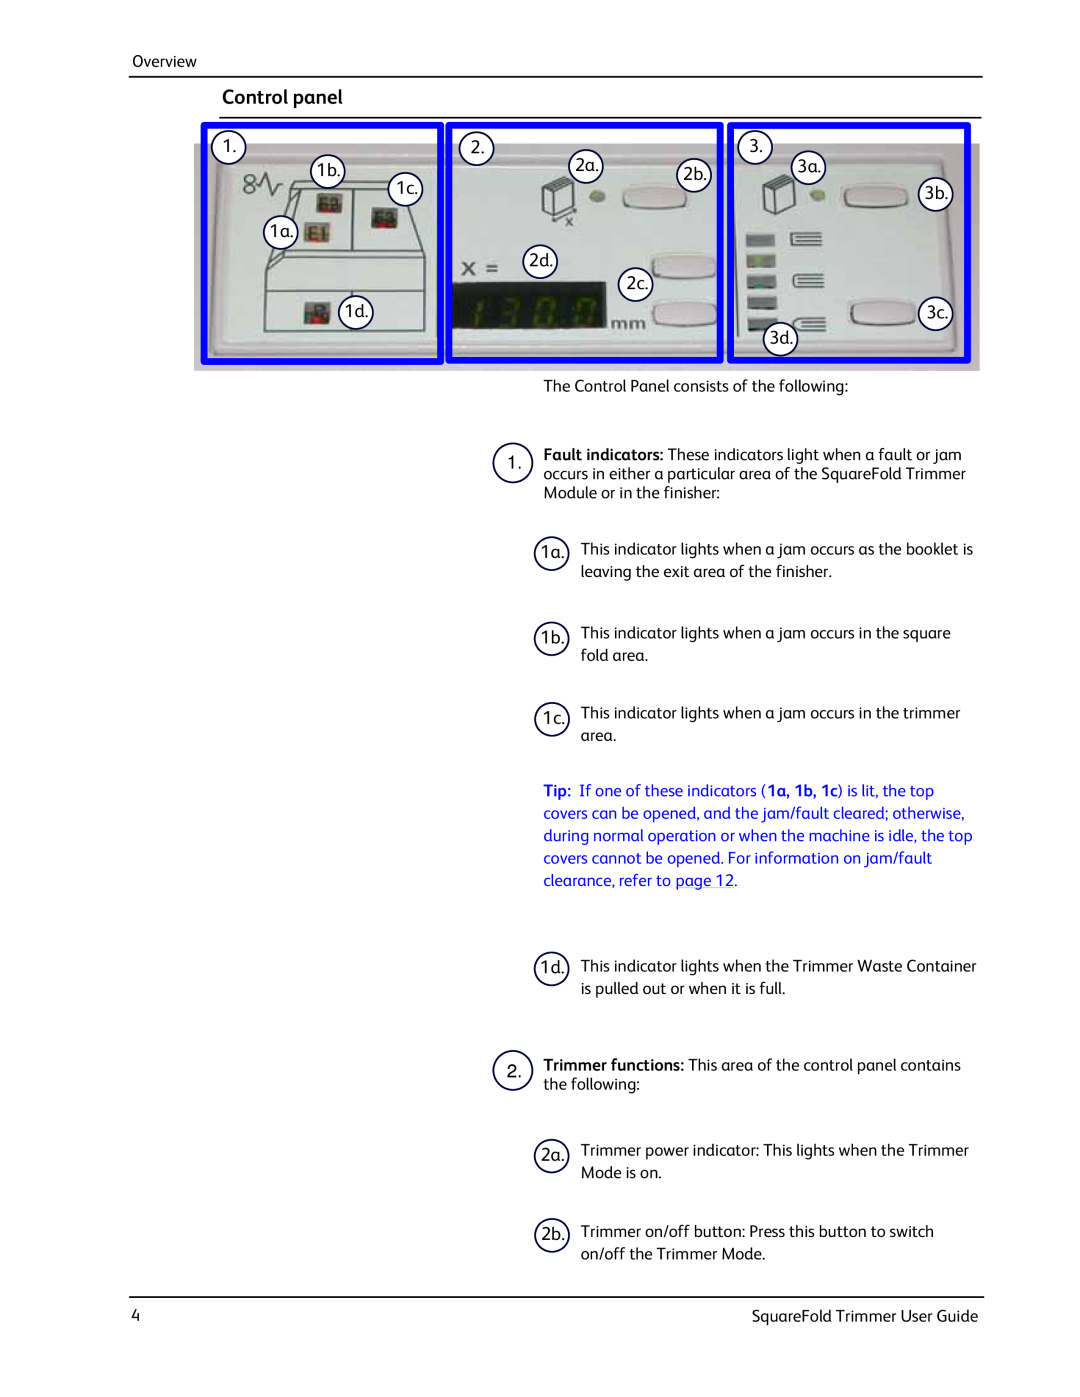 Xerox SquareFold manual Control panel, 1 1b 1c 1a 1d, 2 2a.2b 2d 2c, 3 3a 3b 3c 3d, 2a 2b 